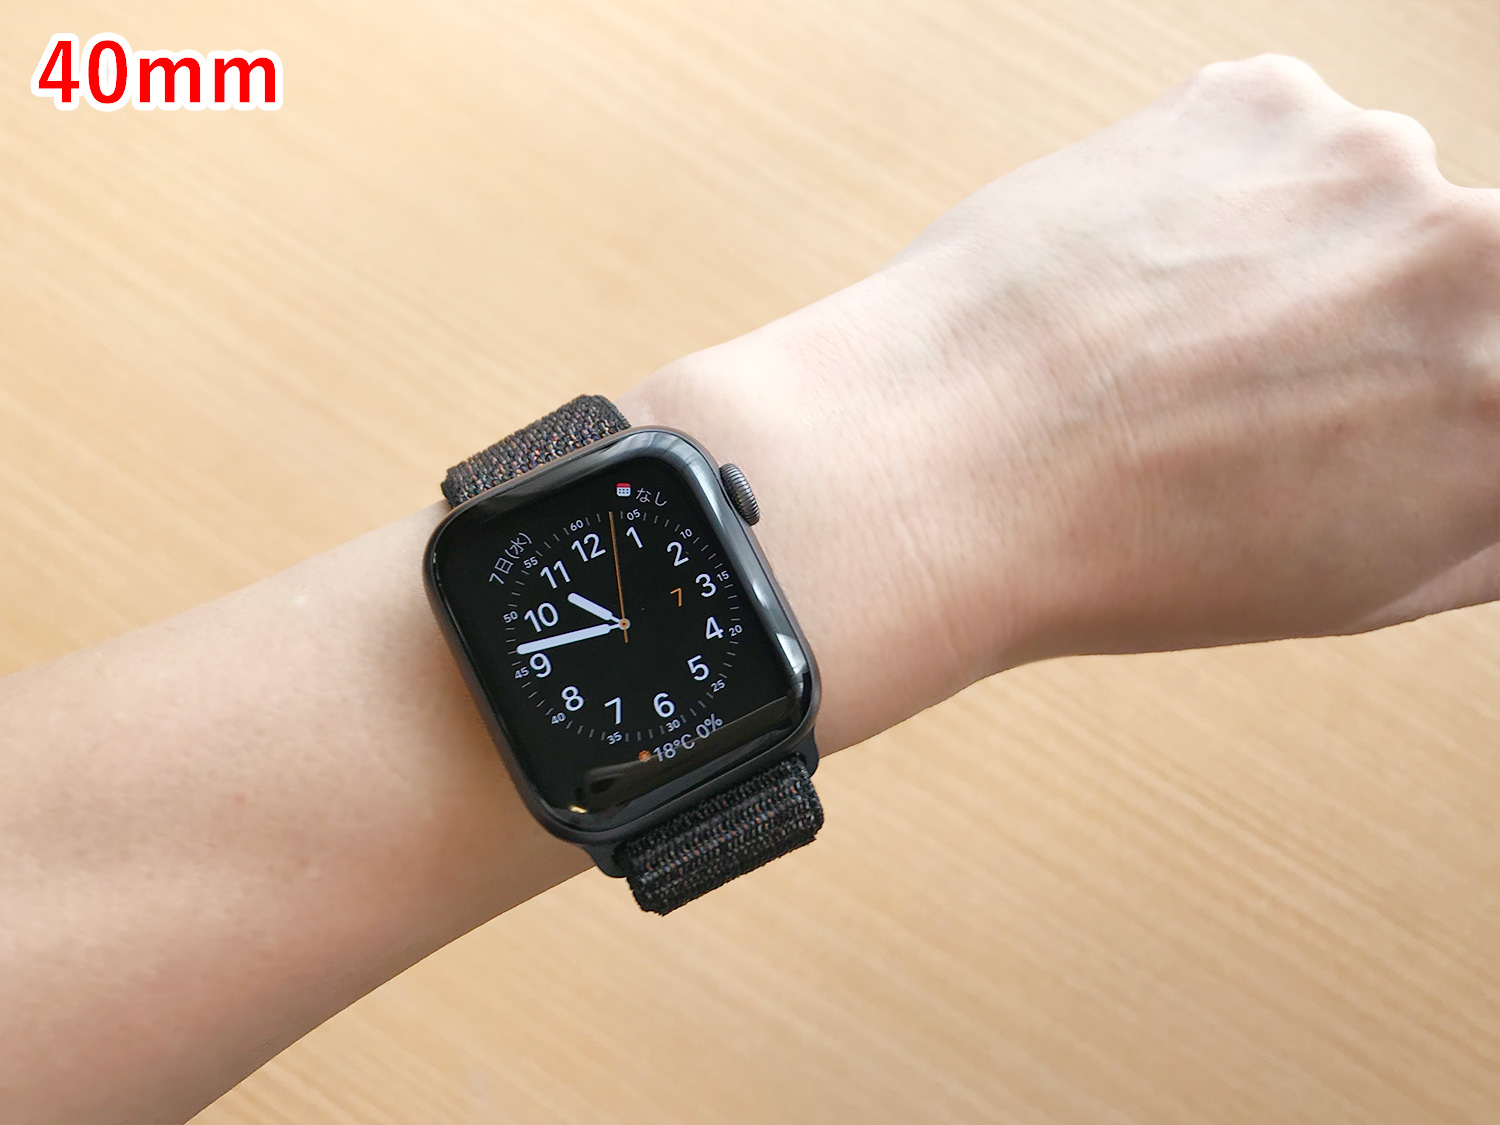 Apple Watch Series 4(40mm)とSeries 3(38mm)のサイズ比較